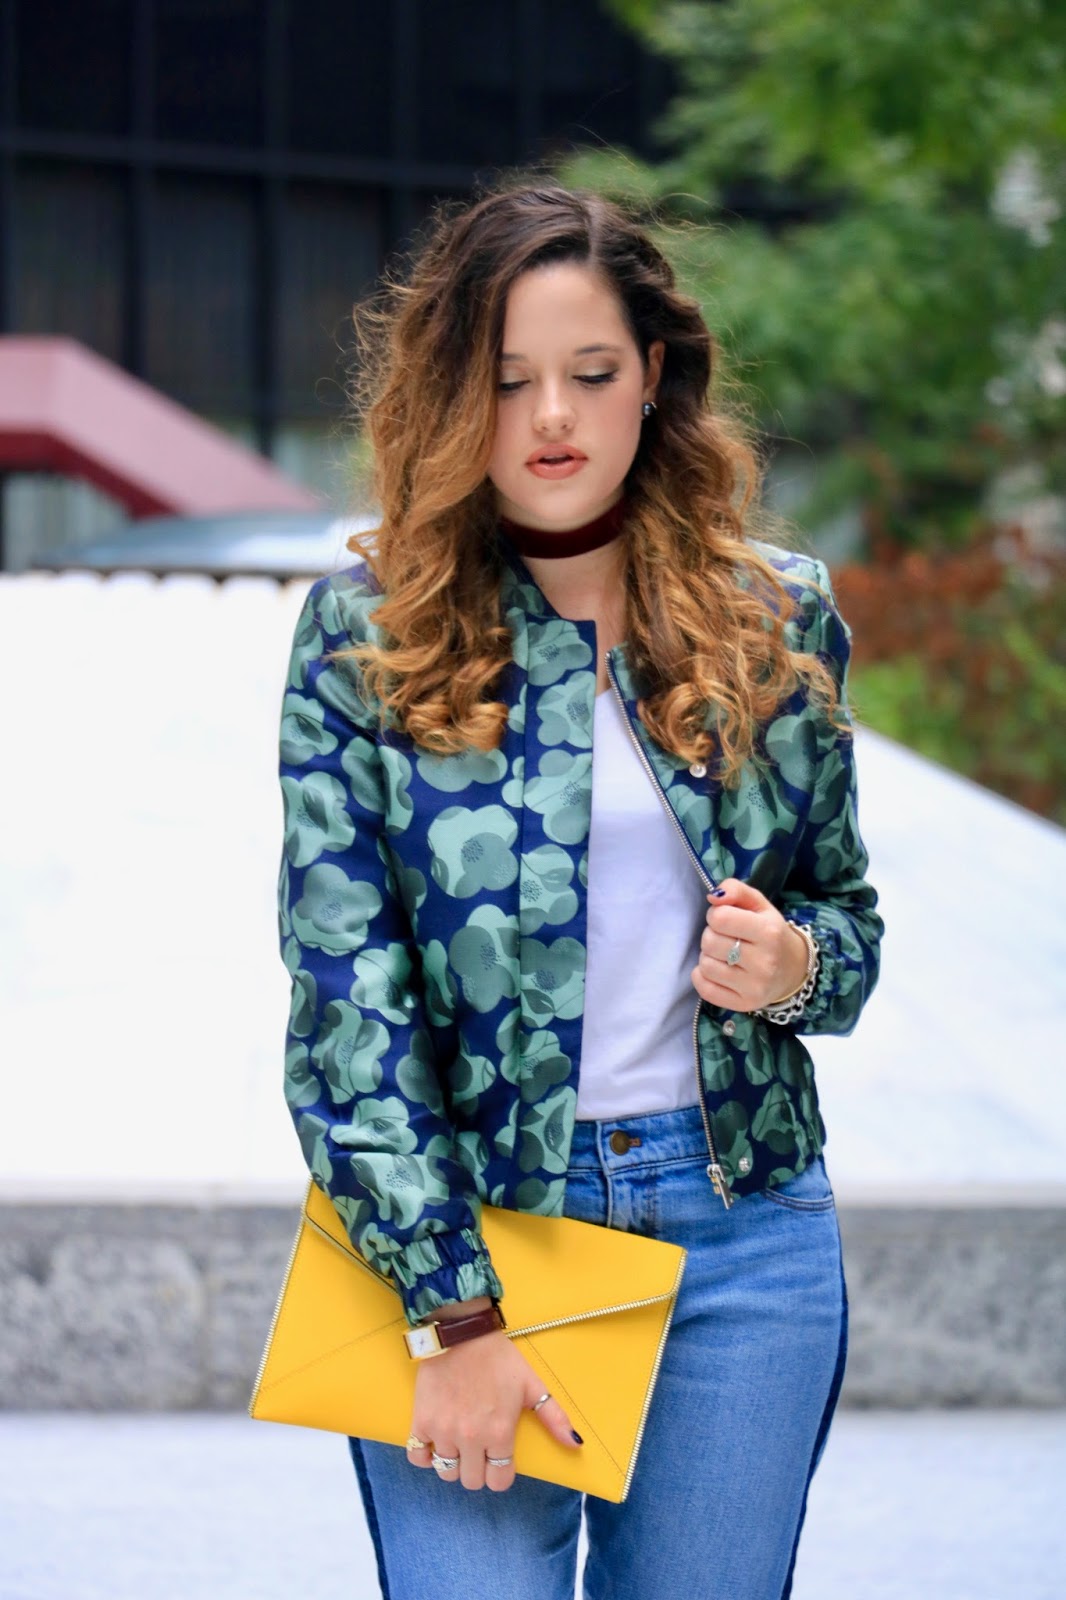 NYC Fashion blogger Kathleen Harper wearing a fall bomber jacket from Banana Republic